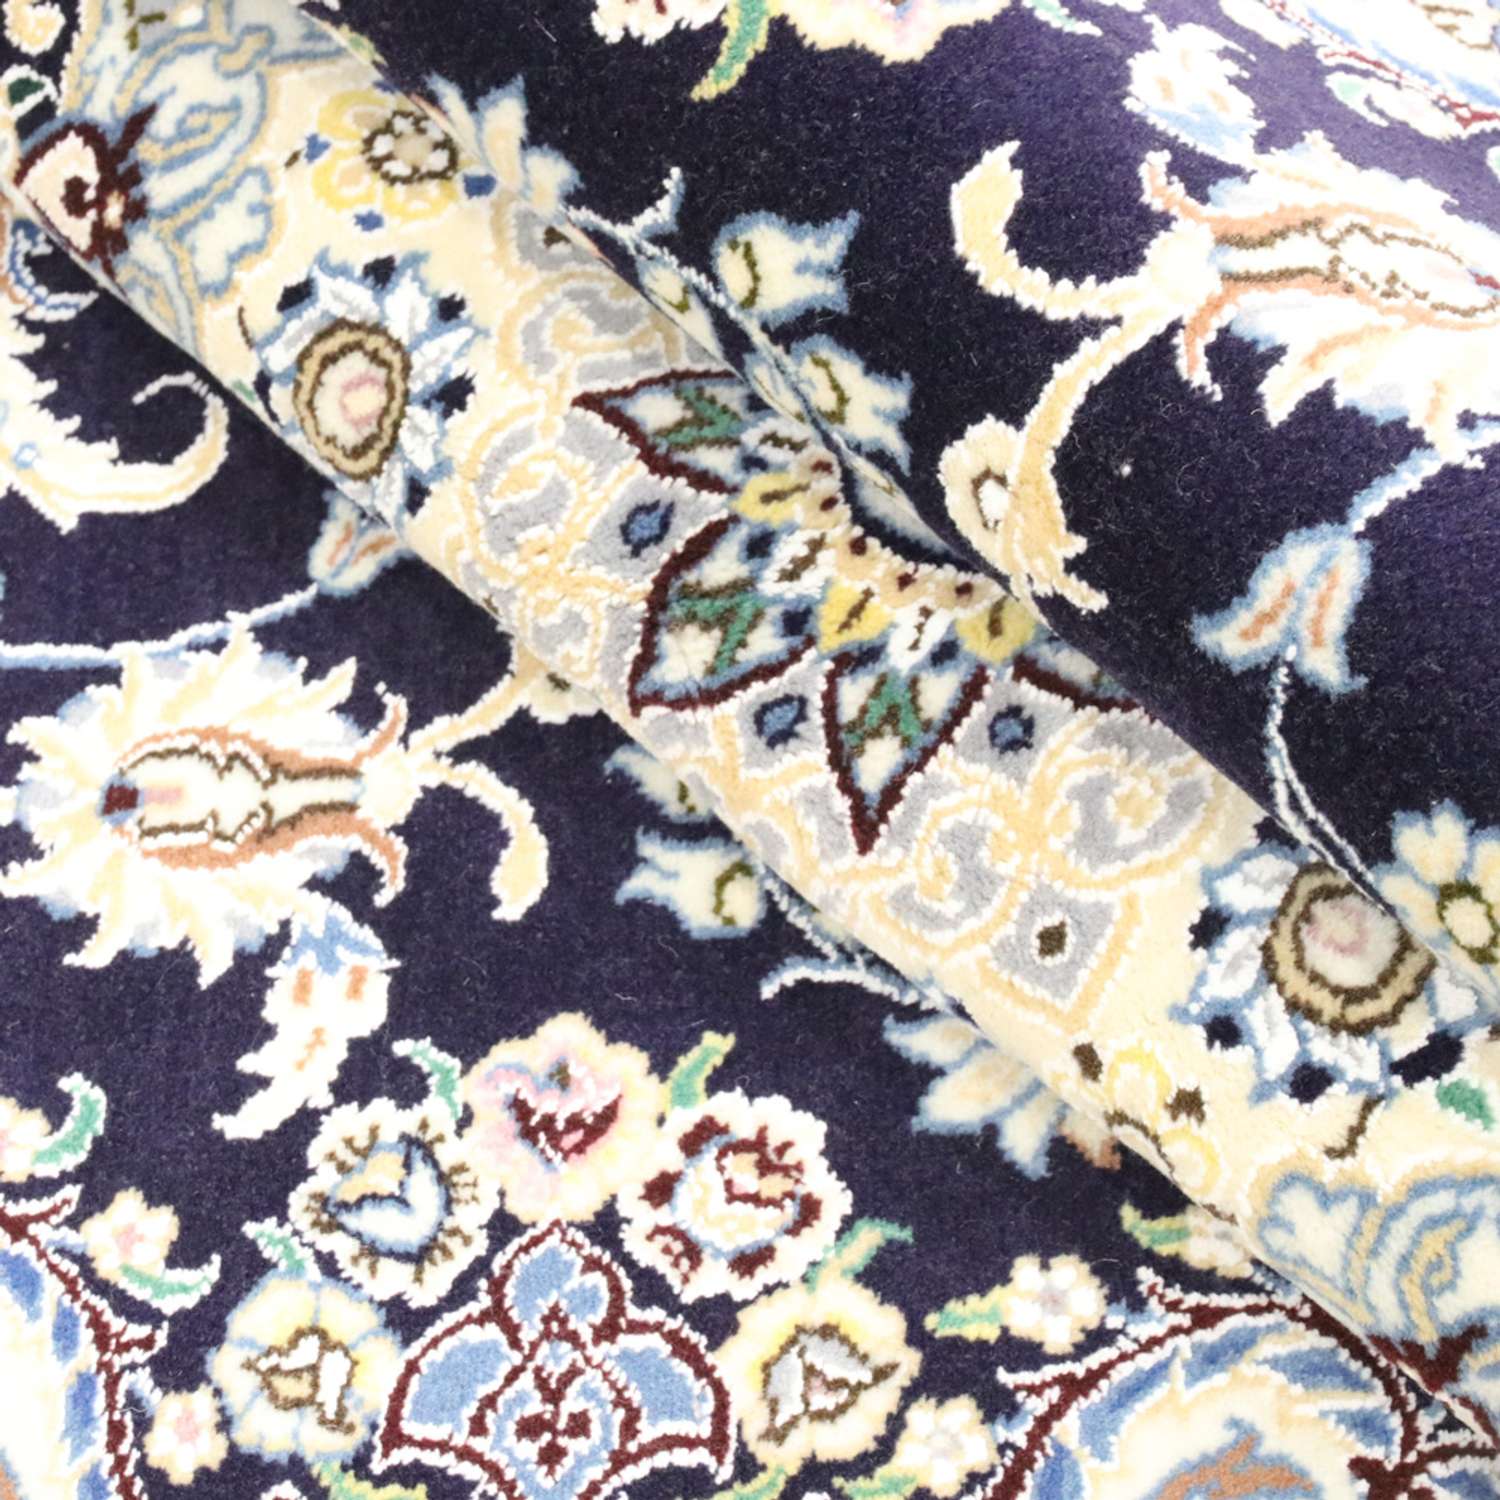 Perzisch tapijt - Nain - Koninklijk - 247 x 156 cm - donkerblauw